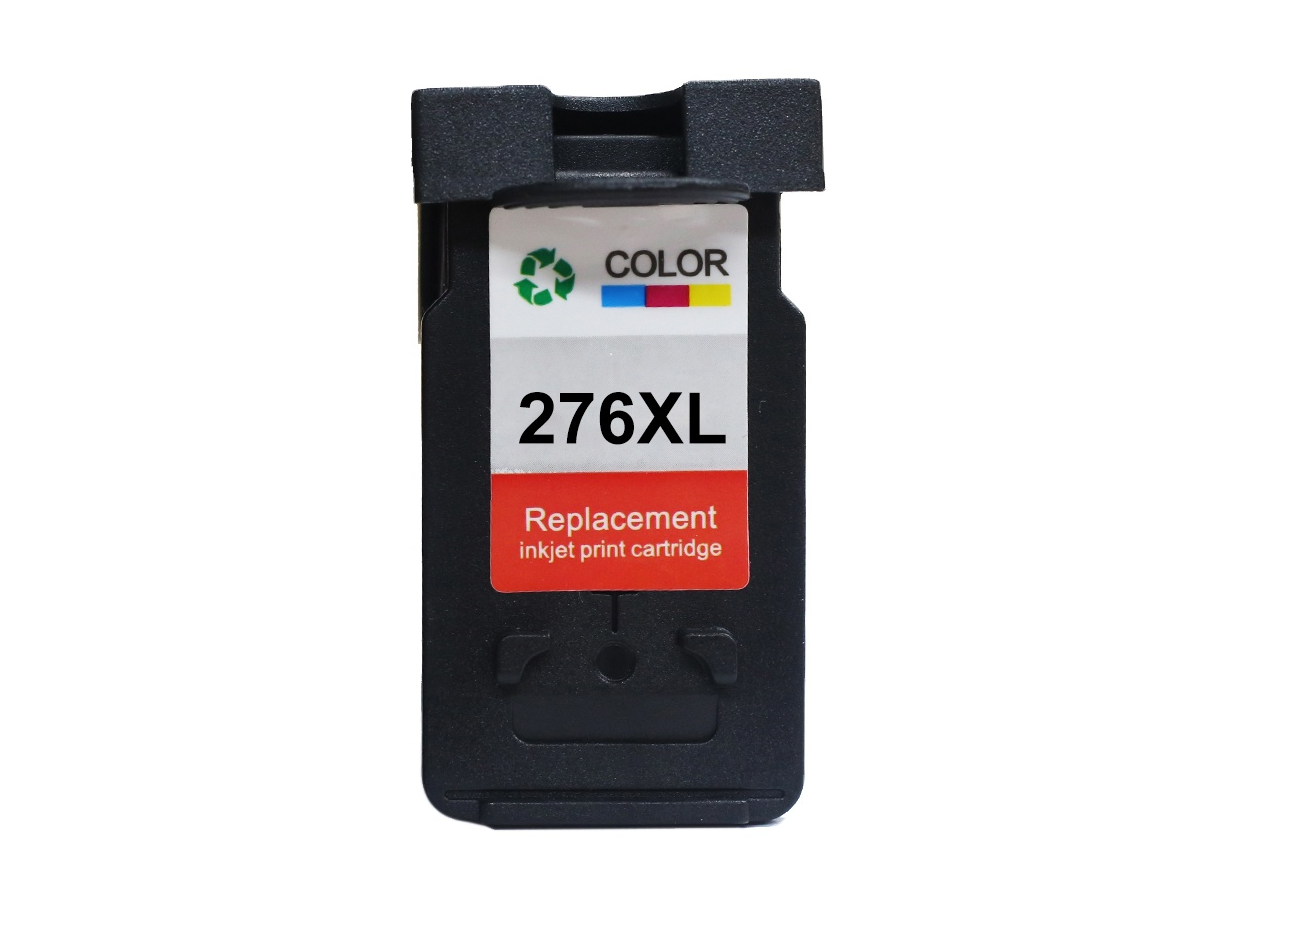 Canon Pixma TS3520 color CL-276XL ink cartridge